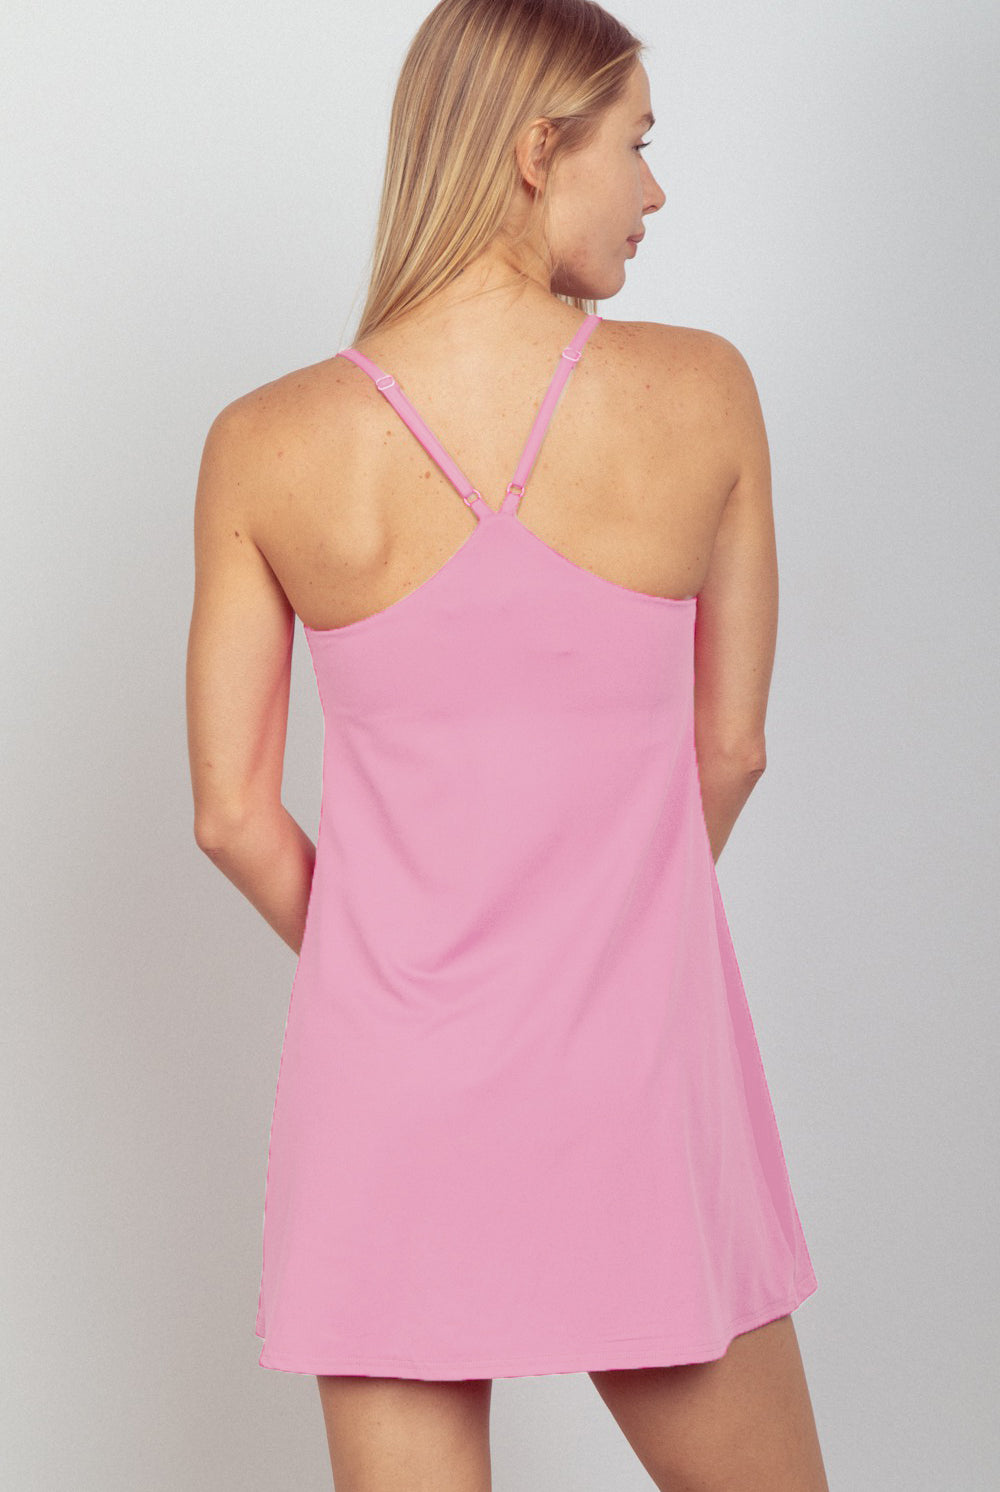 VERY J Sleeveless Active Tennis Dress with Unitard Liner-Krush Kandy, Women's Online Fashion Boutique Located in Phoenix, Arizona (Scottsdale Area)